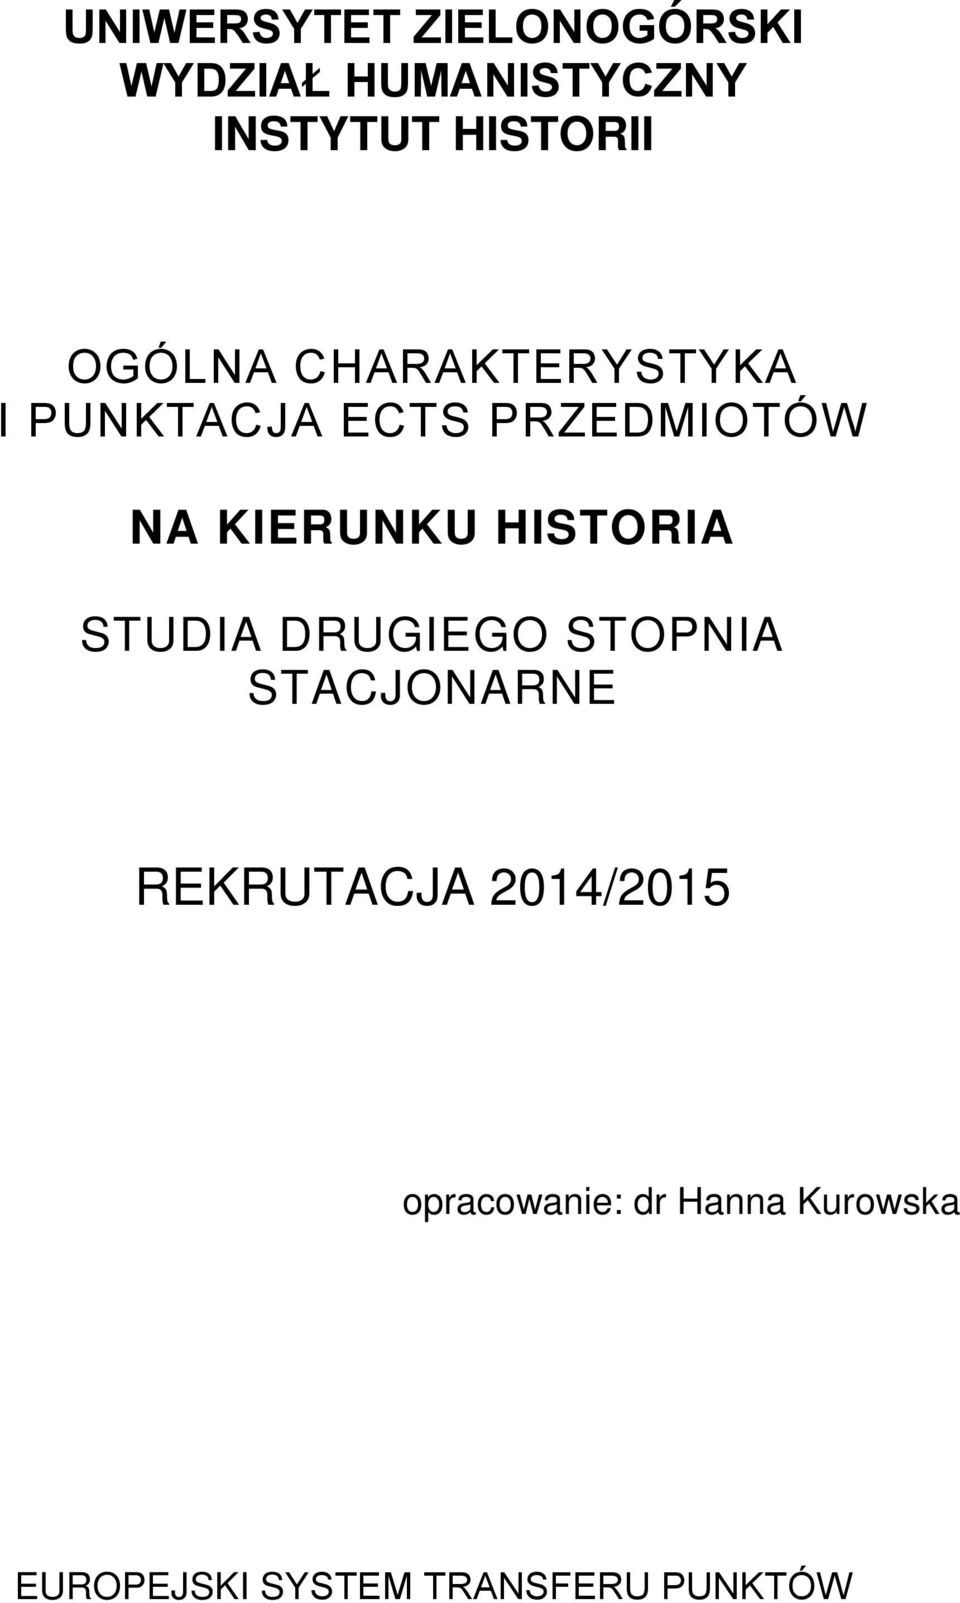 HISTORIA STUDIA DRUGIEGO STOPNIA STACJONARNE REKRUTACJA 2014/2015